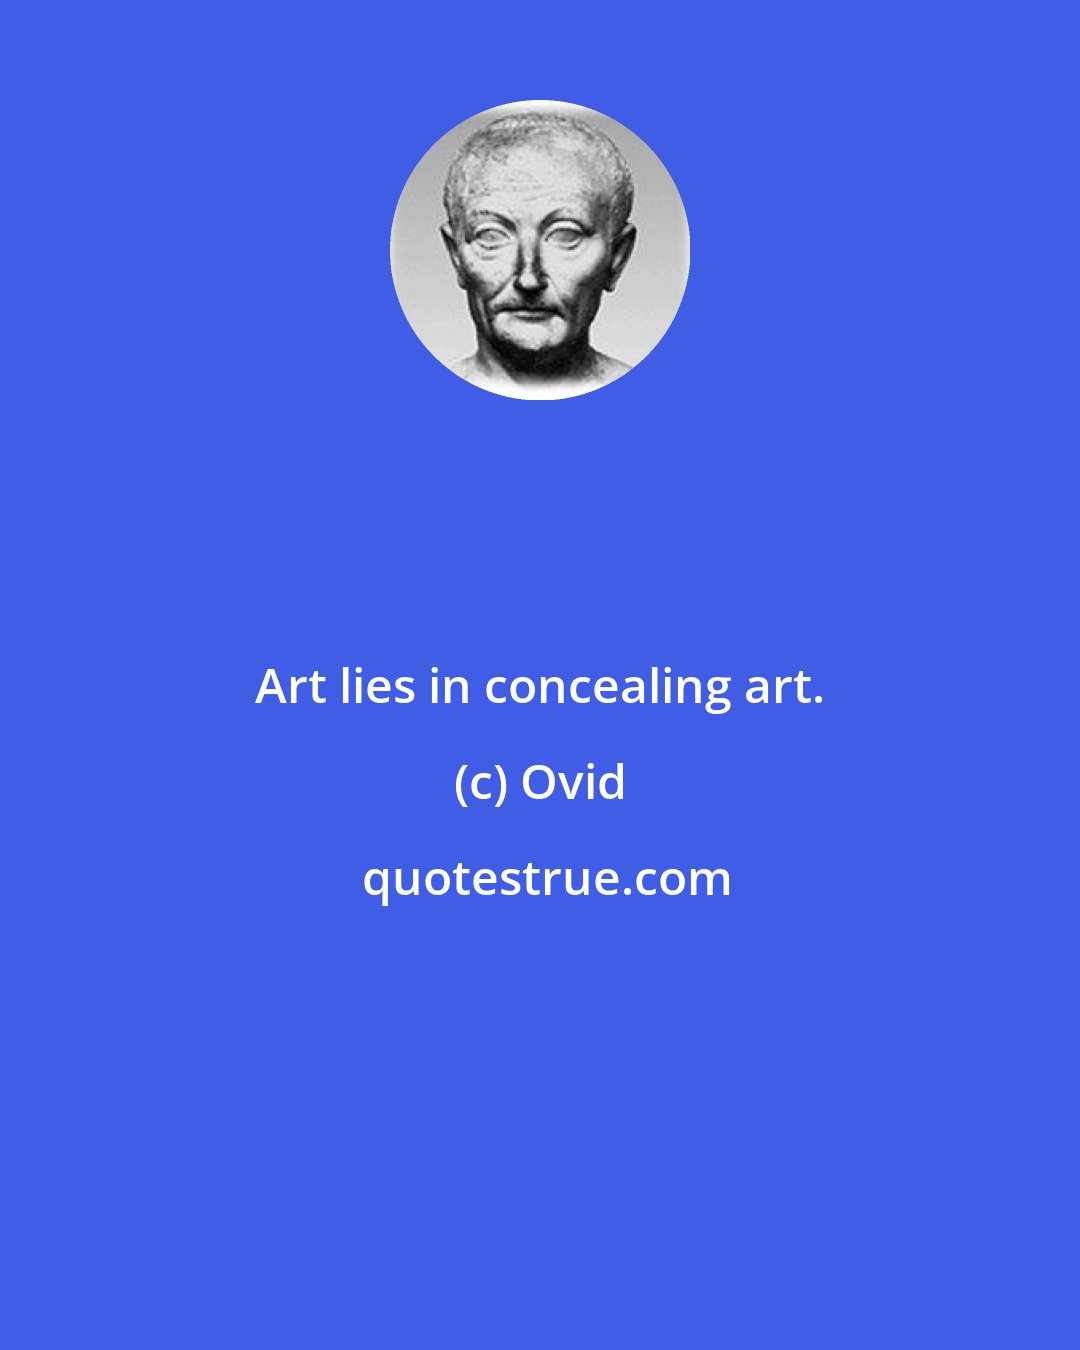 Ovid: Art lies in concealing art.